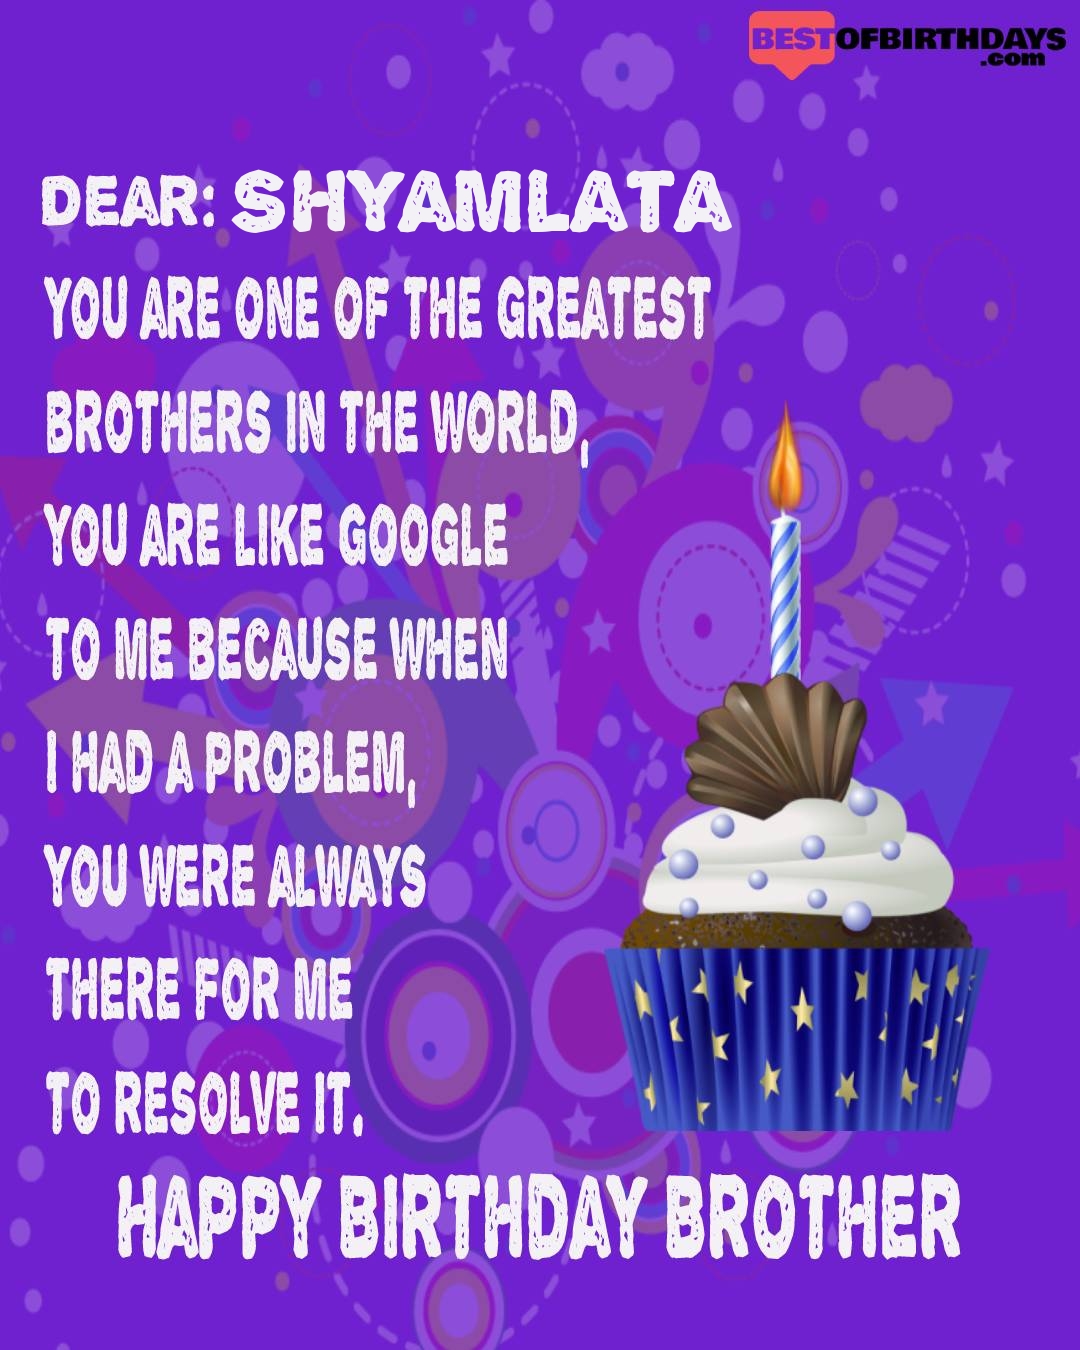 Happy birthday shyamlata bhai brother bro